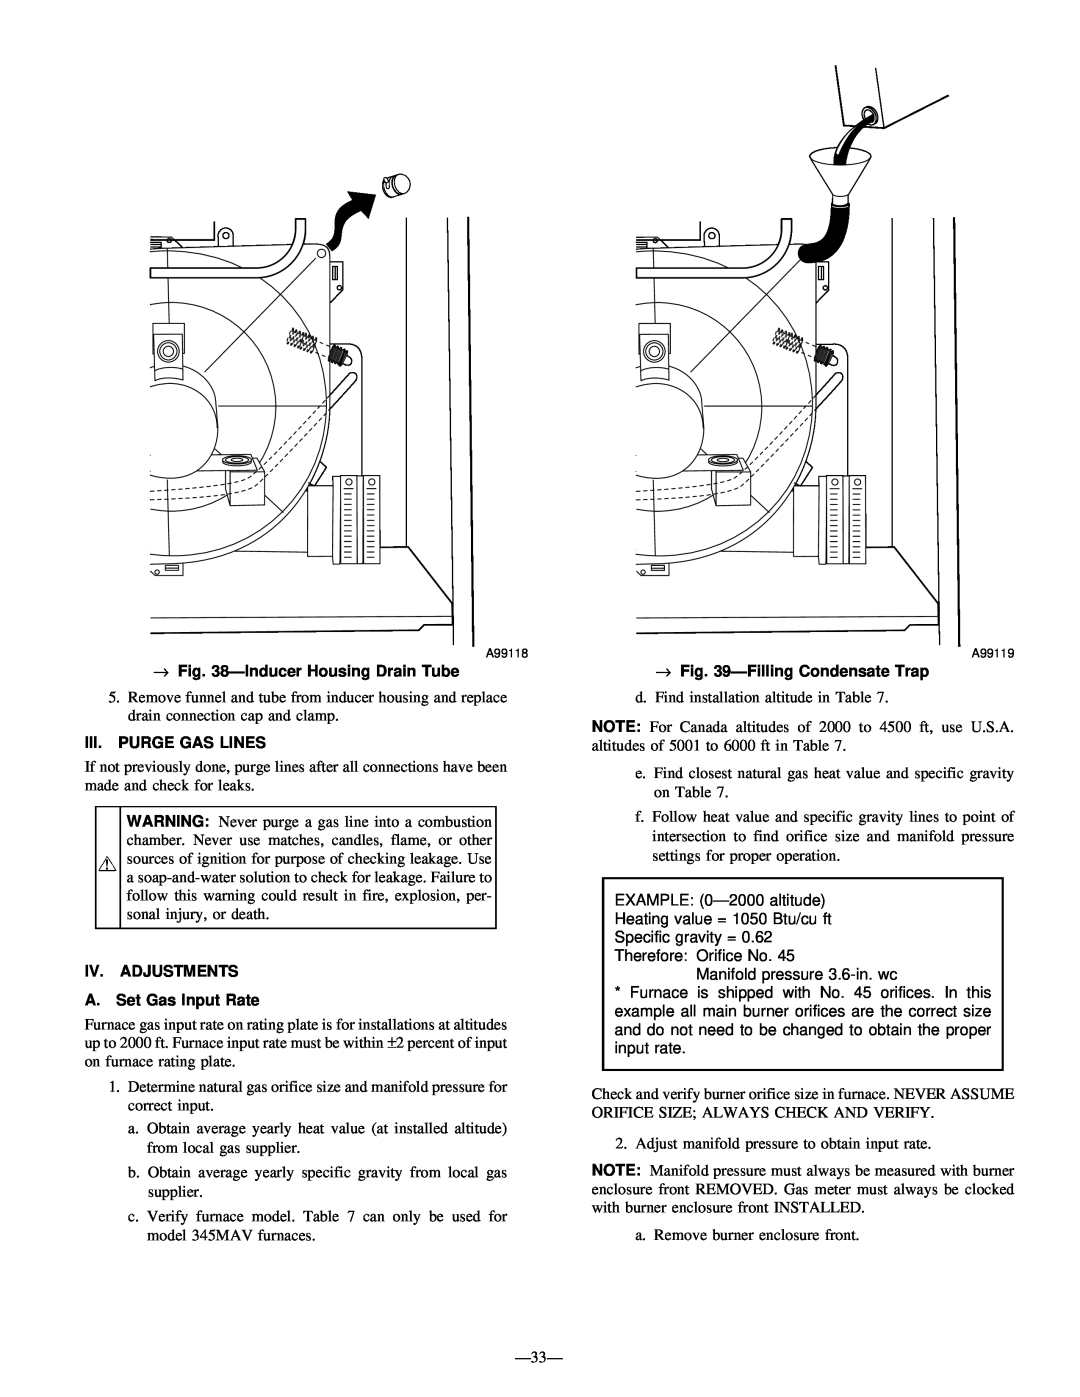 Bryant 345MAV instruction manual → ÐInducer Housing Drain Tube, Iii.Purge Gas Lines, IV. ADJUSTMENTS A.Set Gas Input Rate 